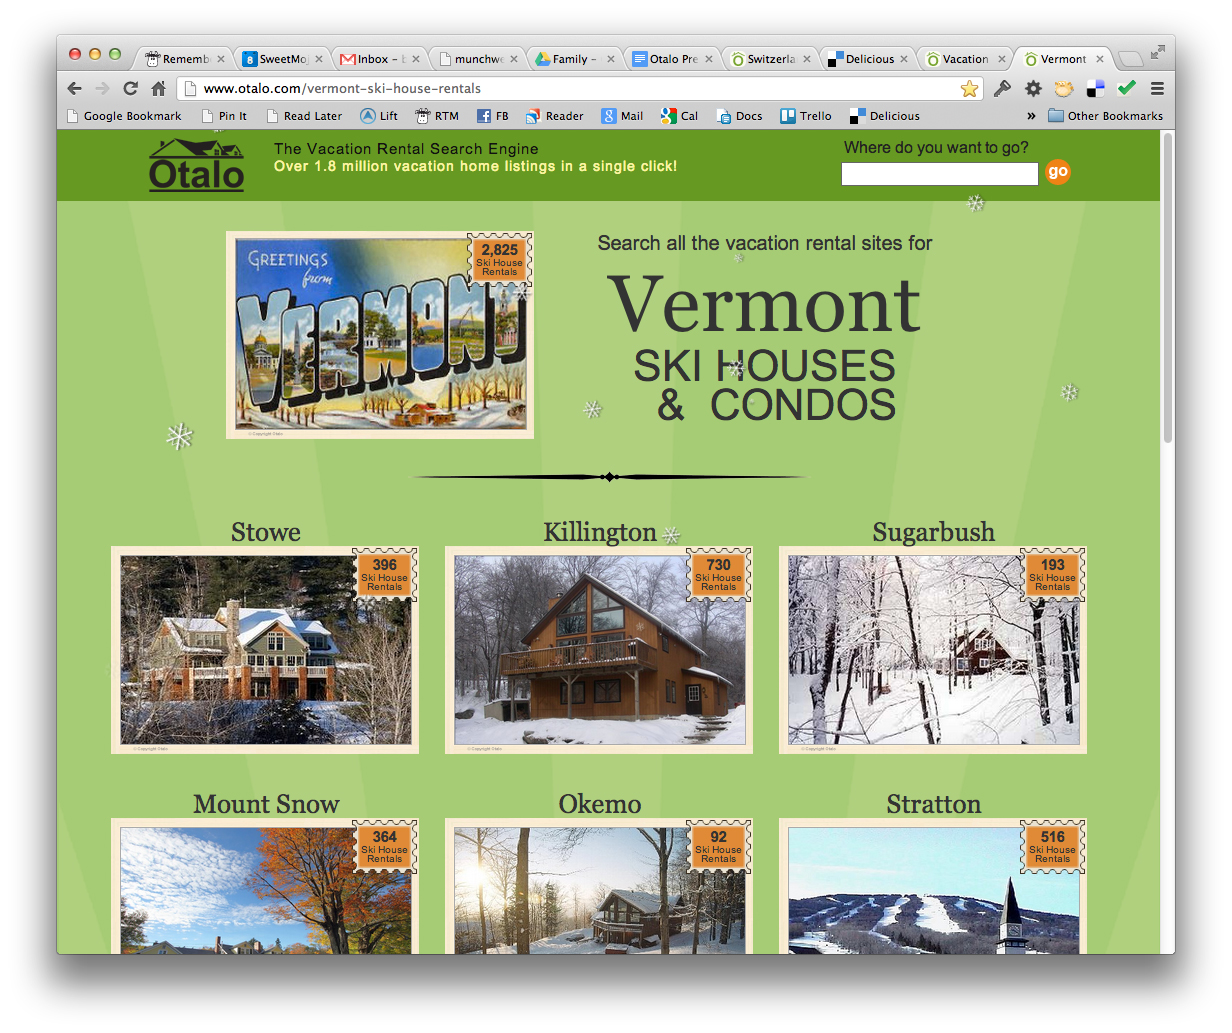 Otalo's Vermont Ski House Search